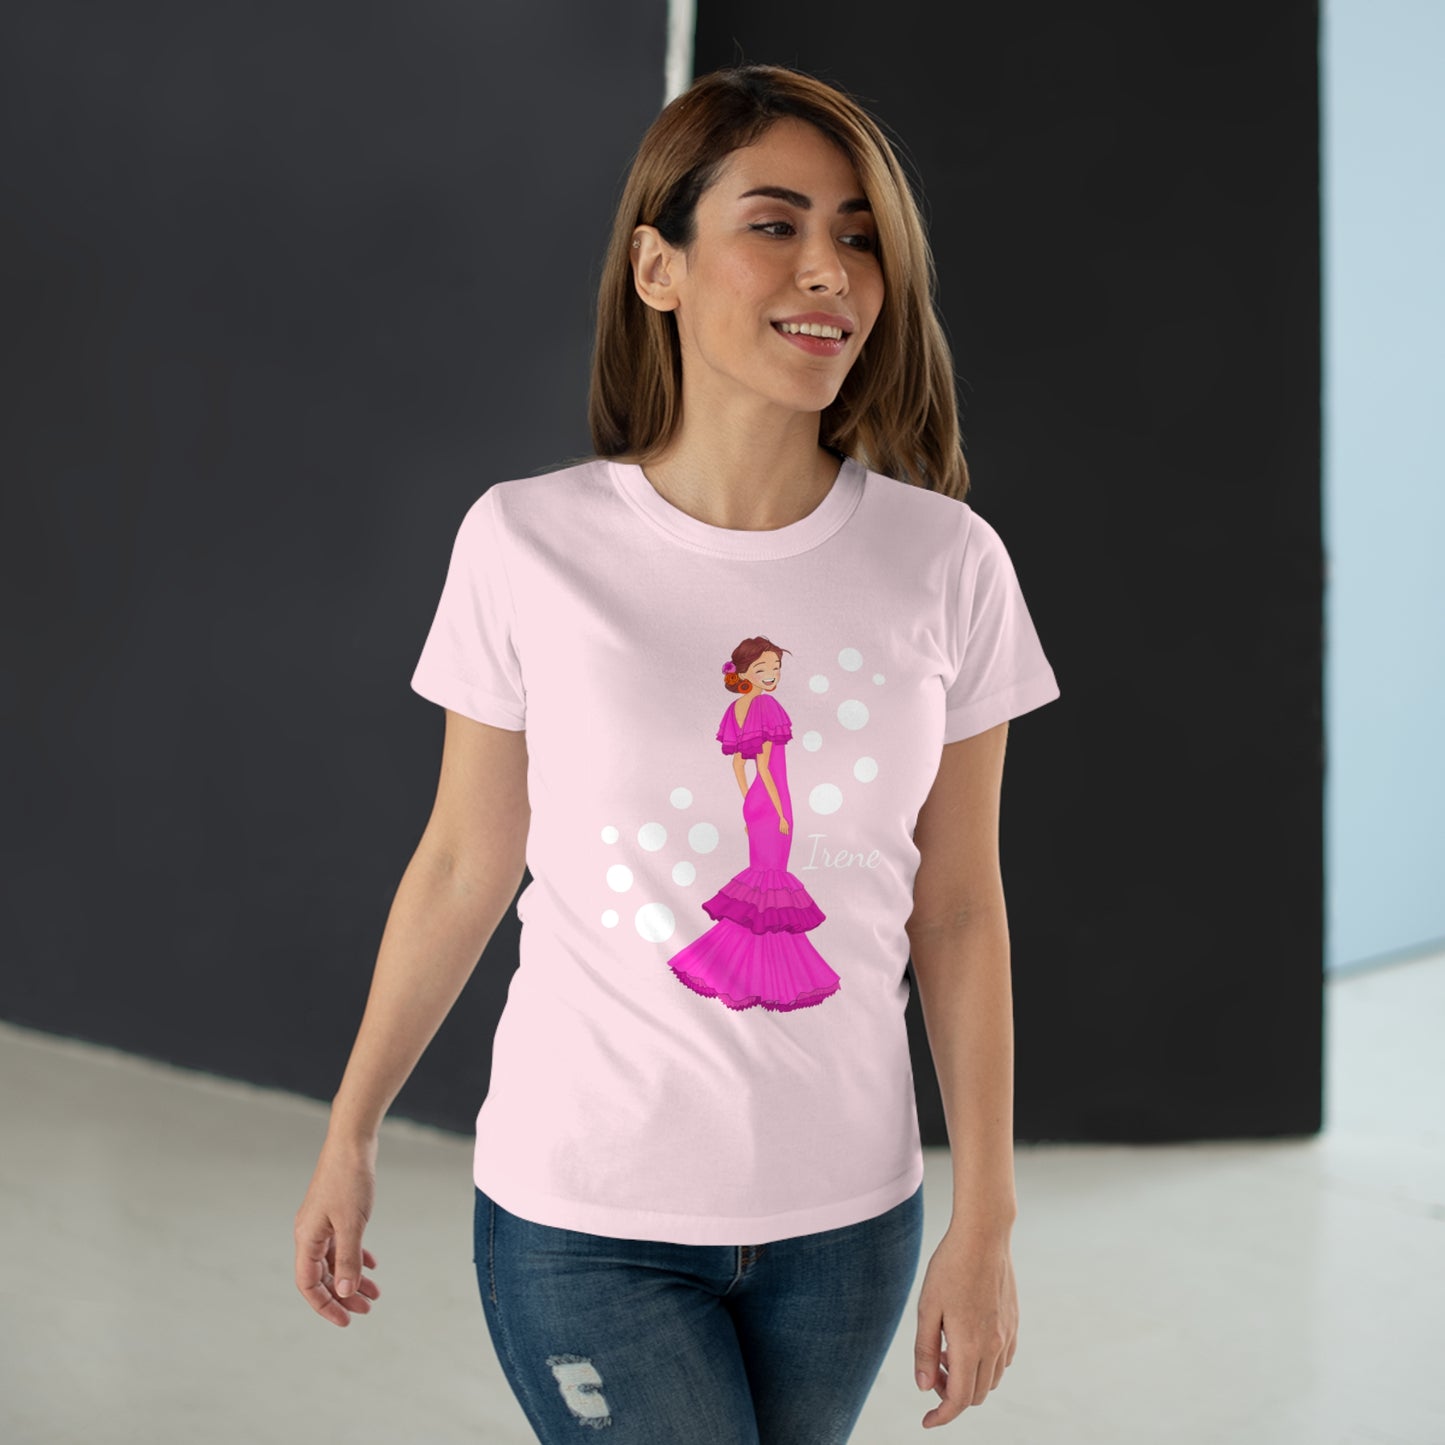 a woman wearing a pink princess t - shirt